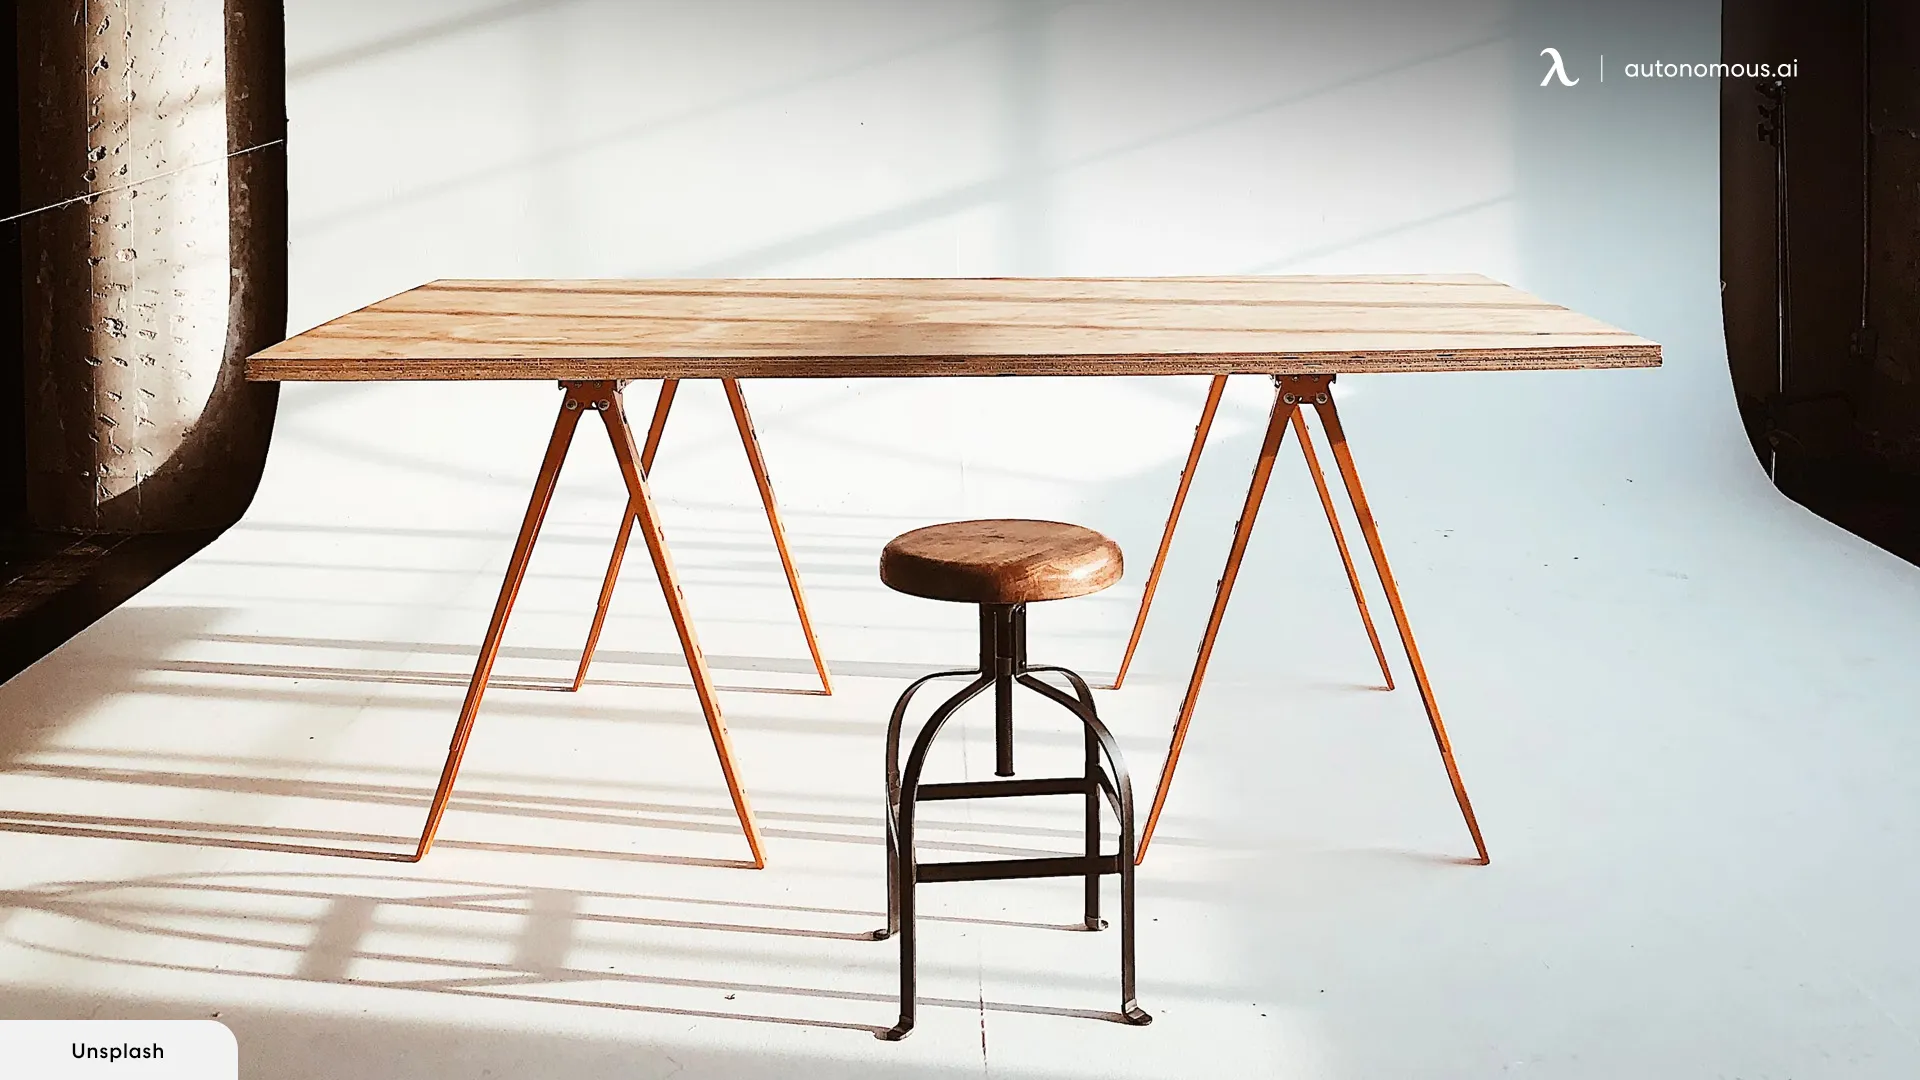 Materials Matter: Wood, Glass, and Metal Big Desks Compared